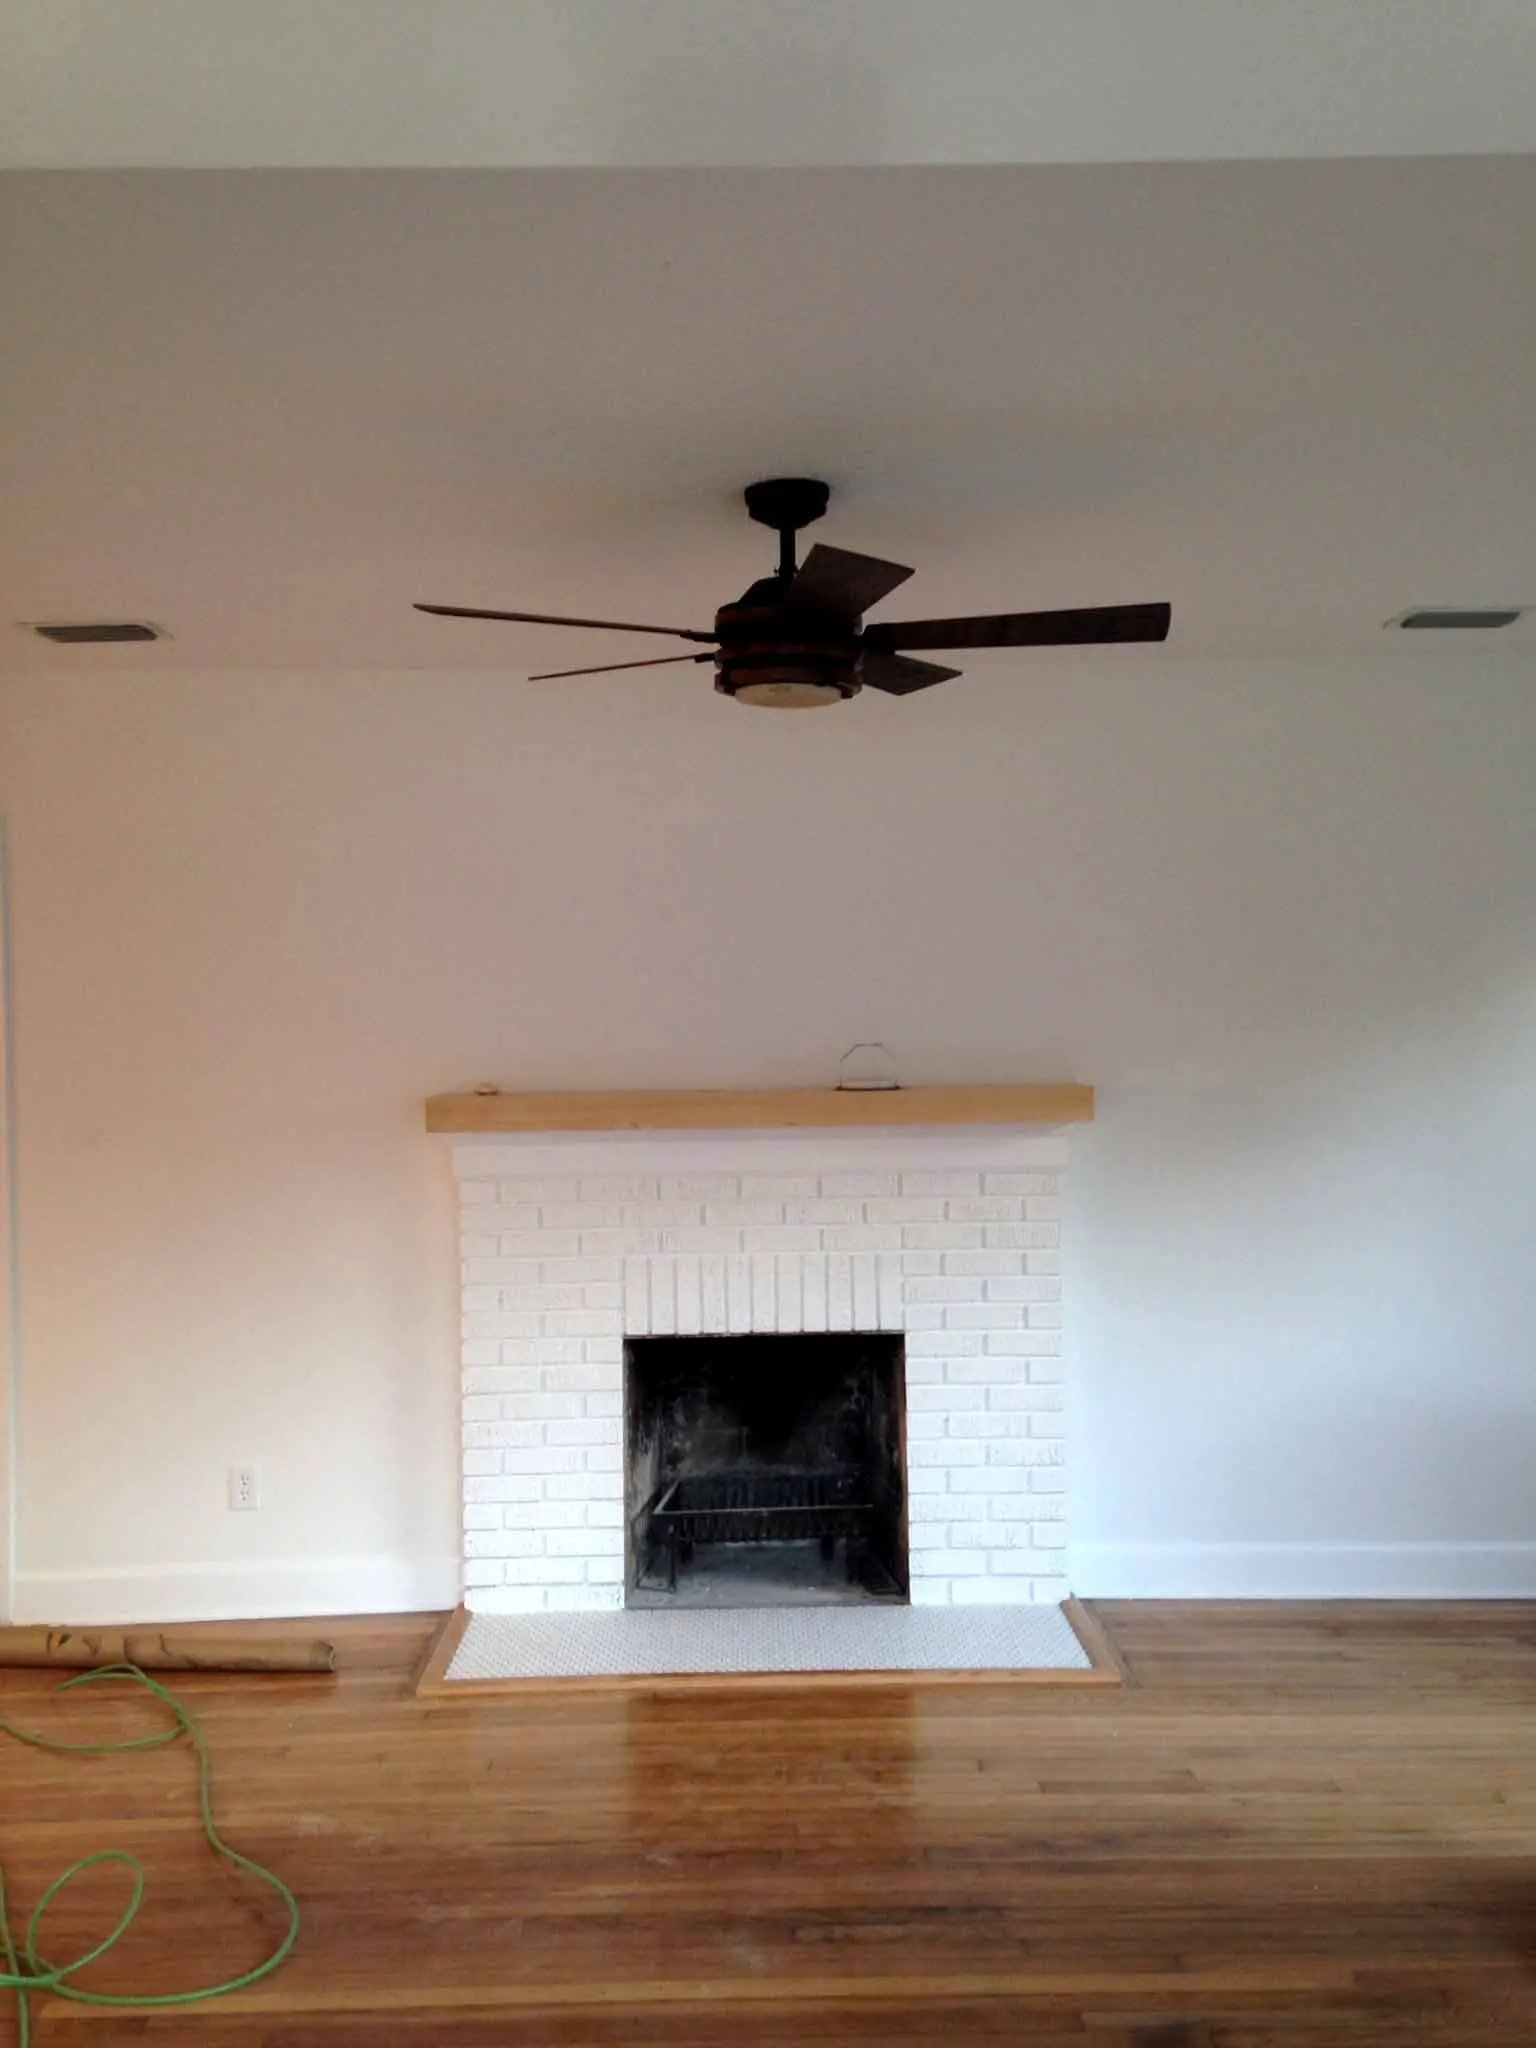 Fireplace Renovation In Progress - That Homebird Life